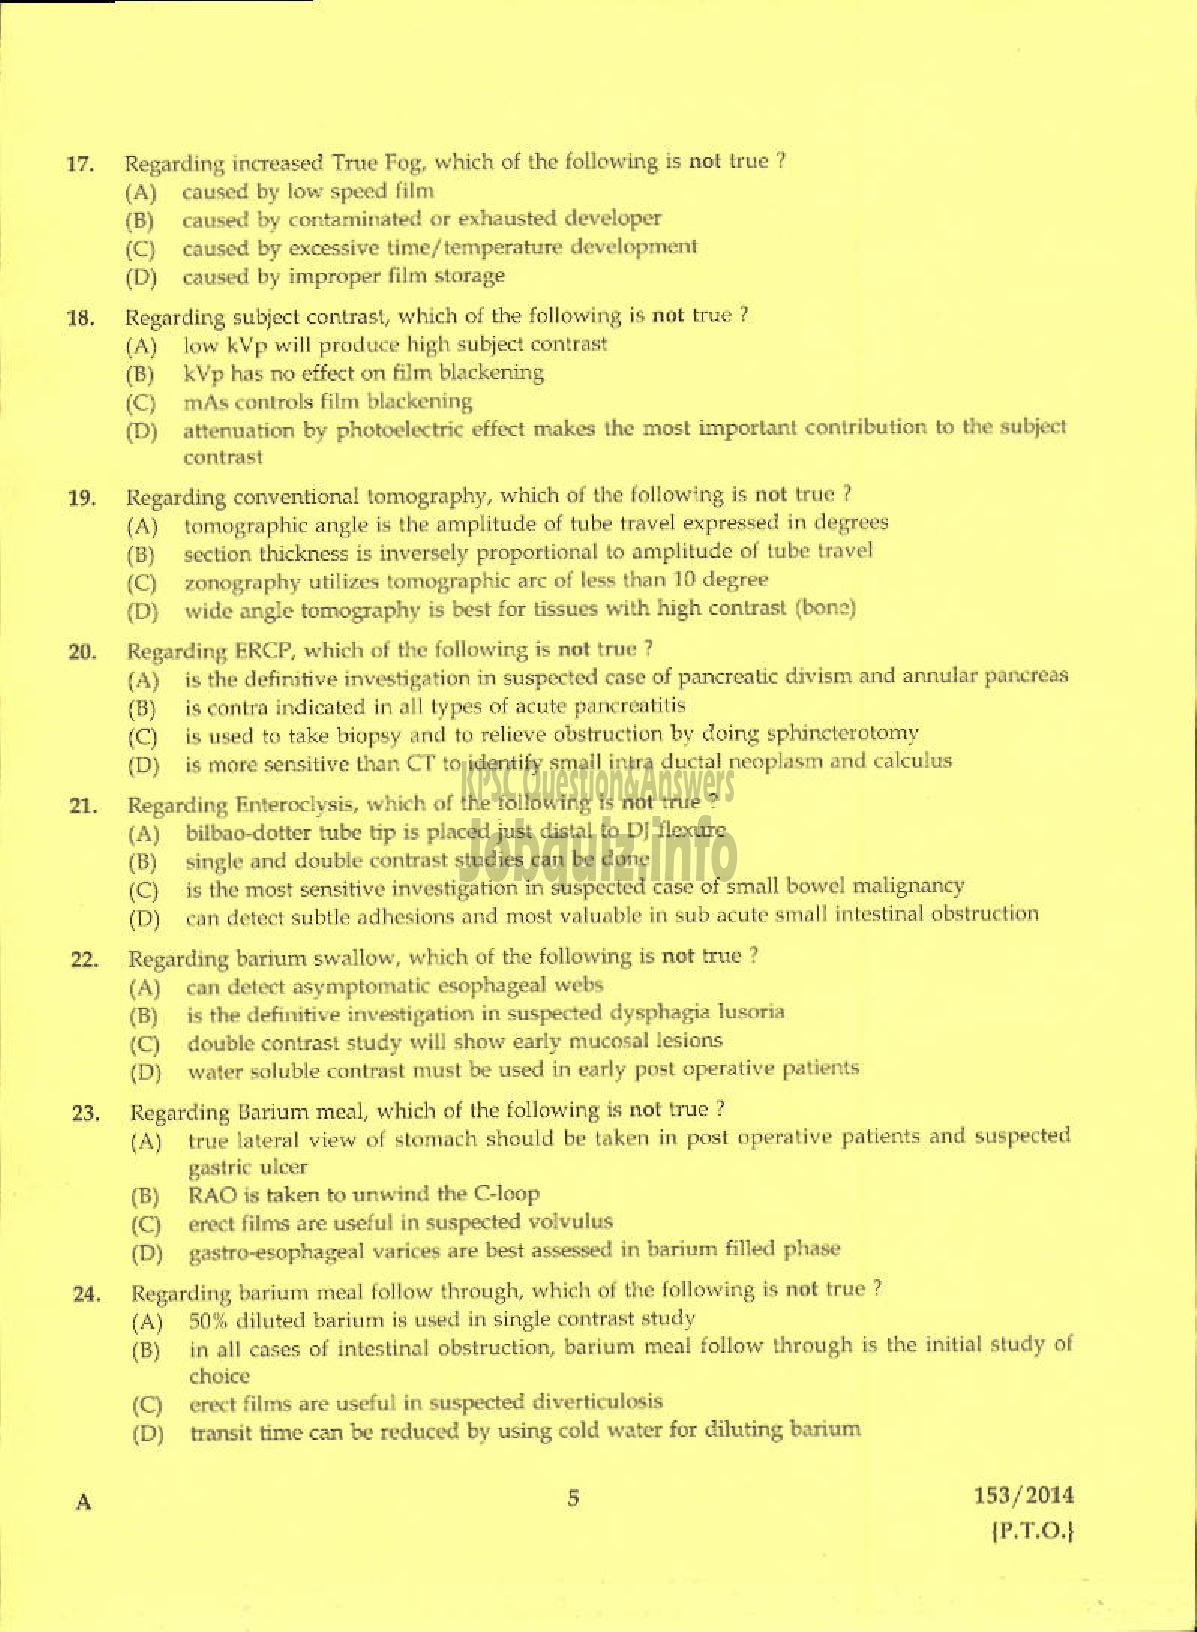 Kerala PSC Question Paper - X RAY TECHNICIAN GR II INSURANCE MEDICAL SERVICE-3